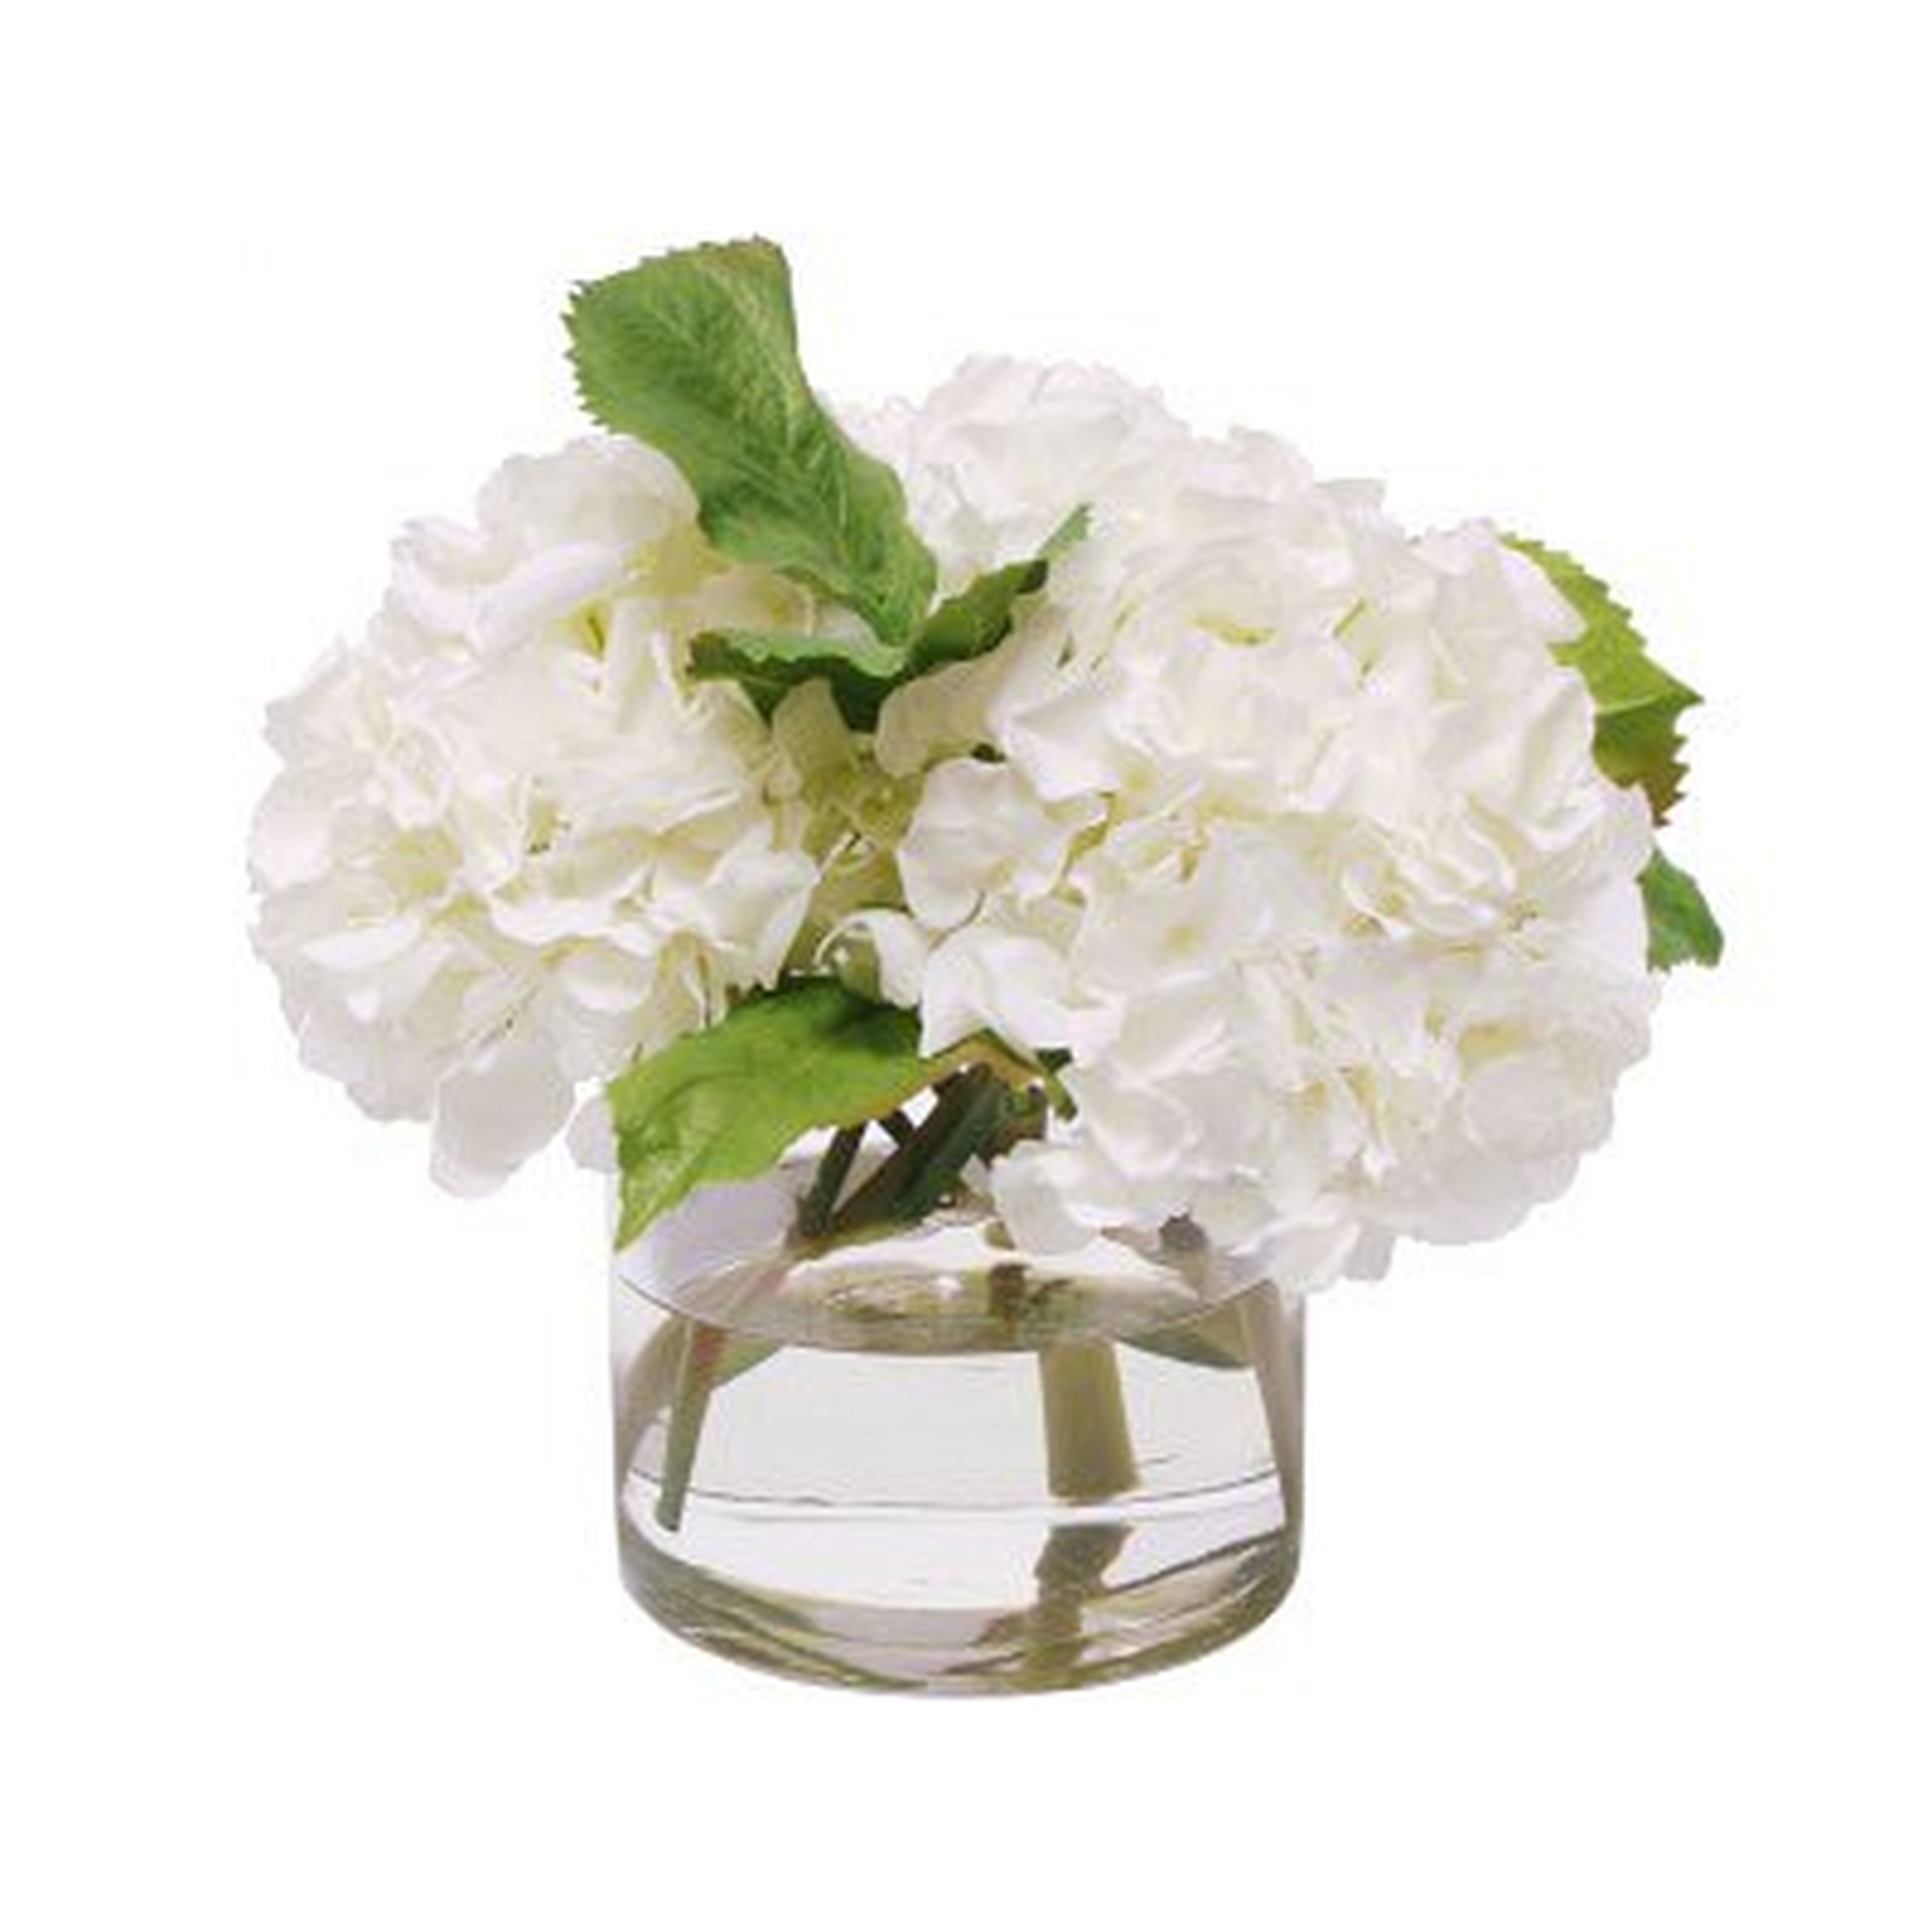 Faux White Hydrangeas in Glass Vase - Williams Sonoma